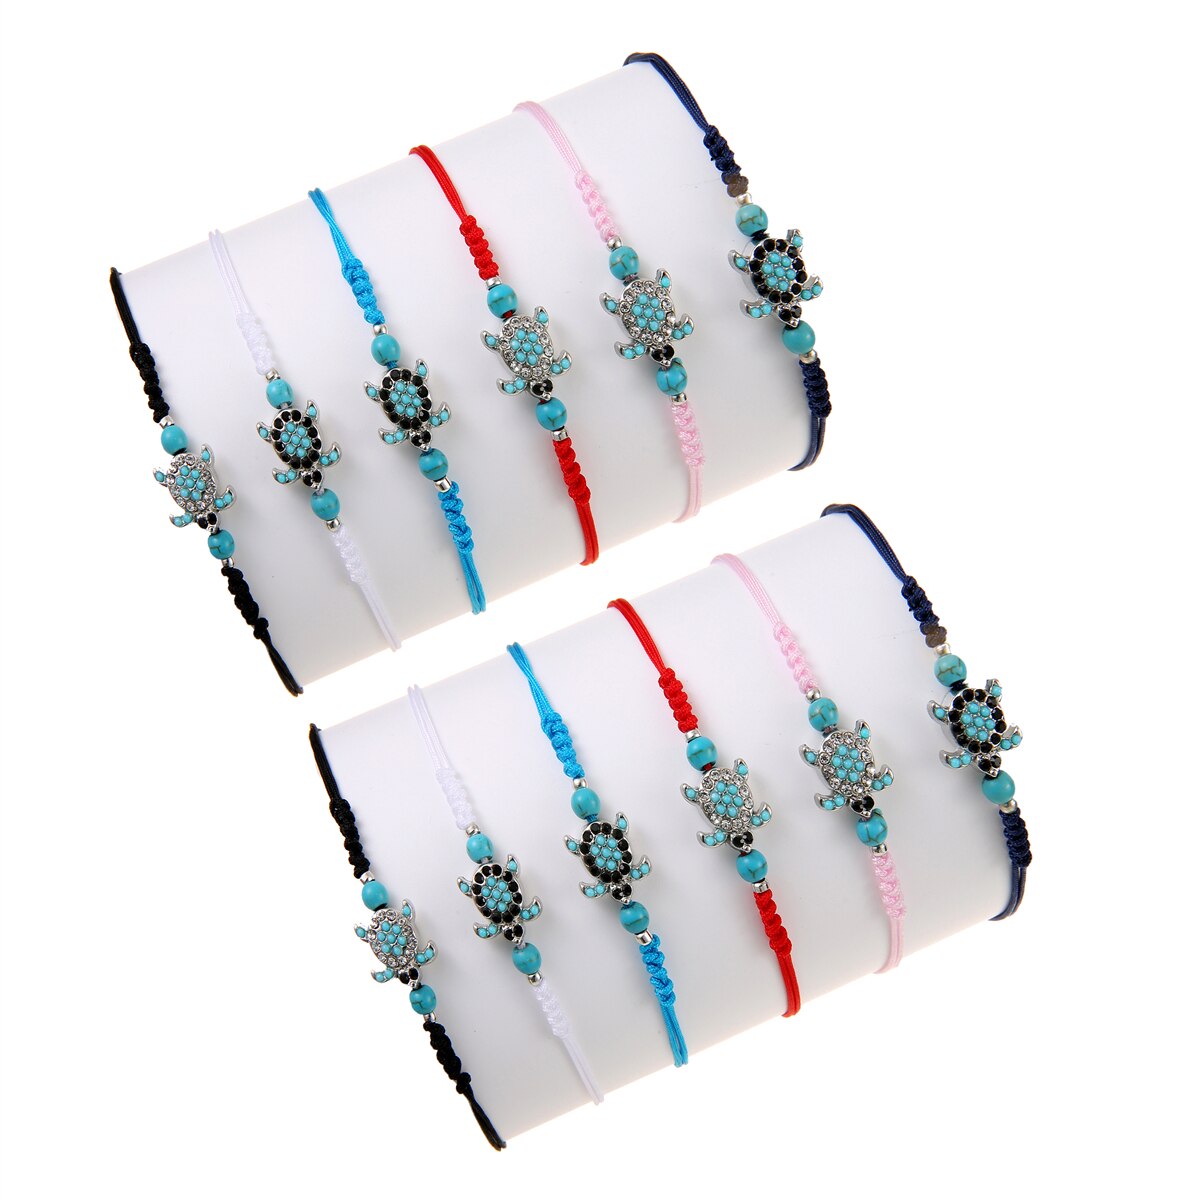 Boho 12pcs/lot Ocean Turtle Charms Bracelets Handmade Adjustable Rope Chain Yoga Wristband for Women Holiday Jewelry